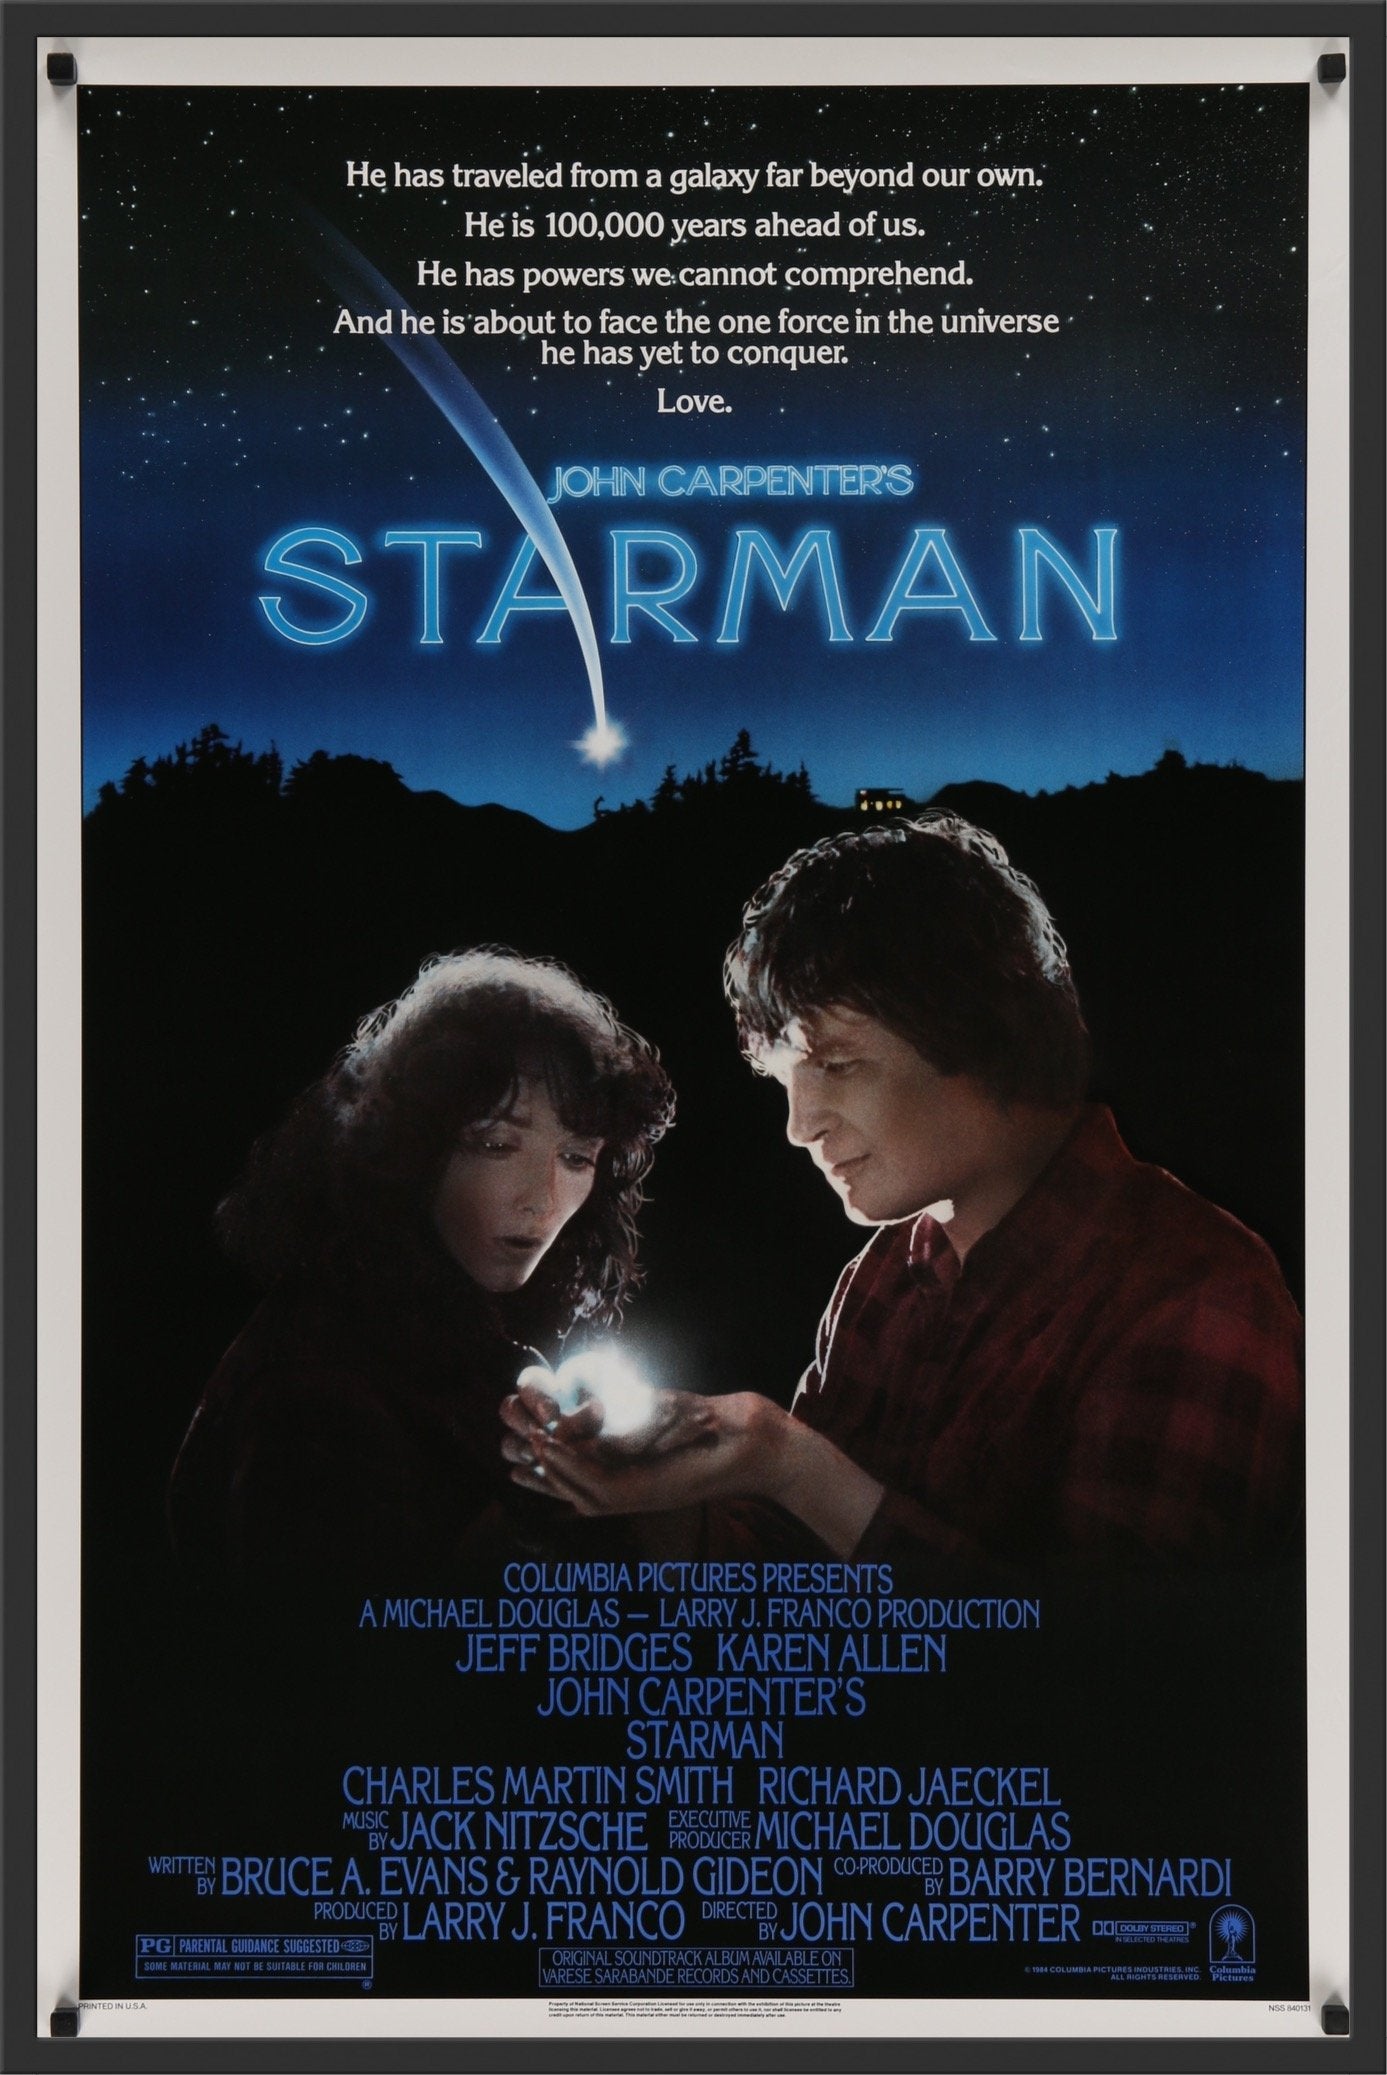 An original movie poster for the John Carpenter film Starman